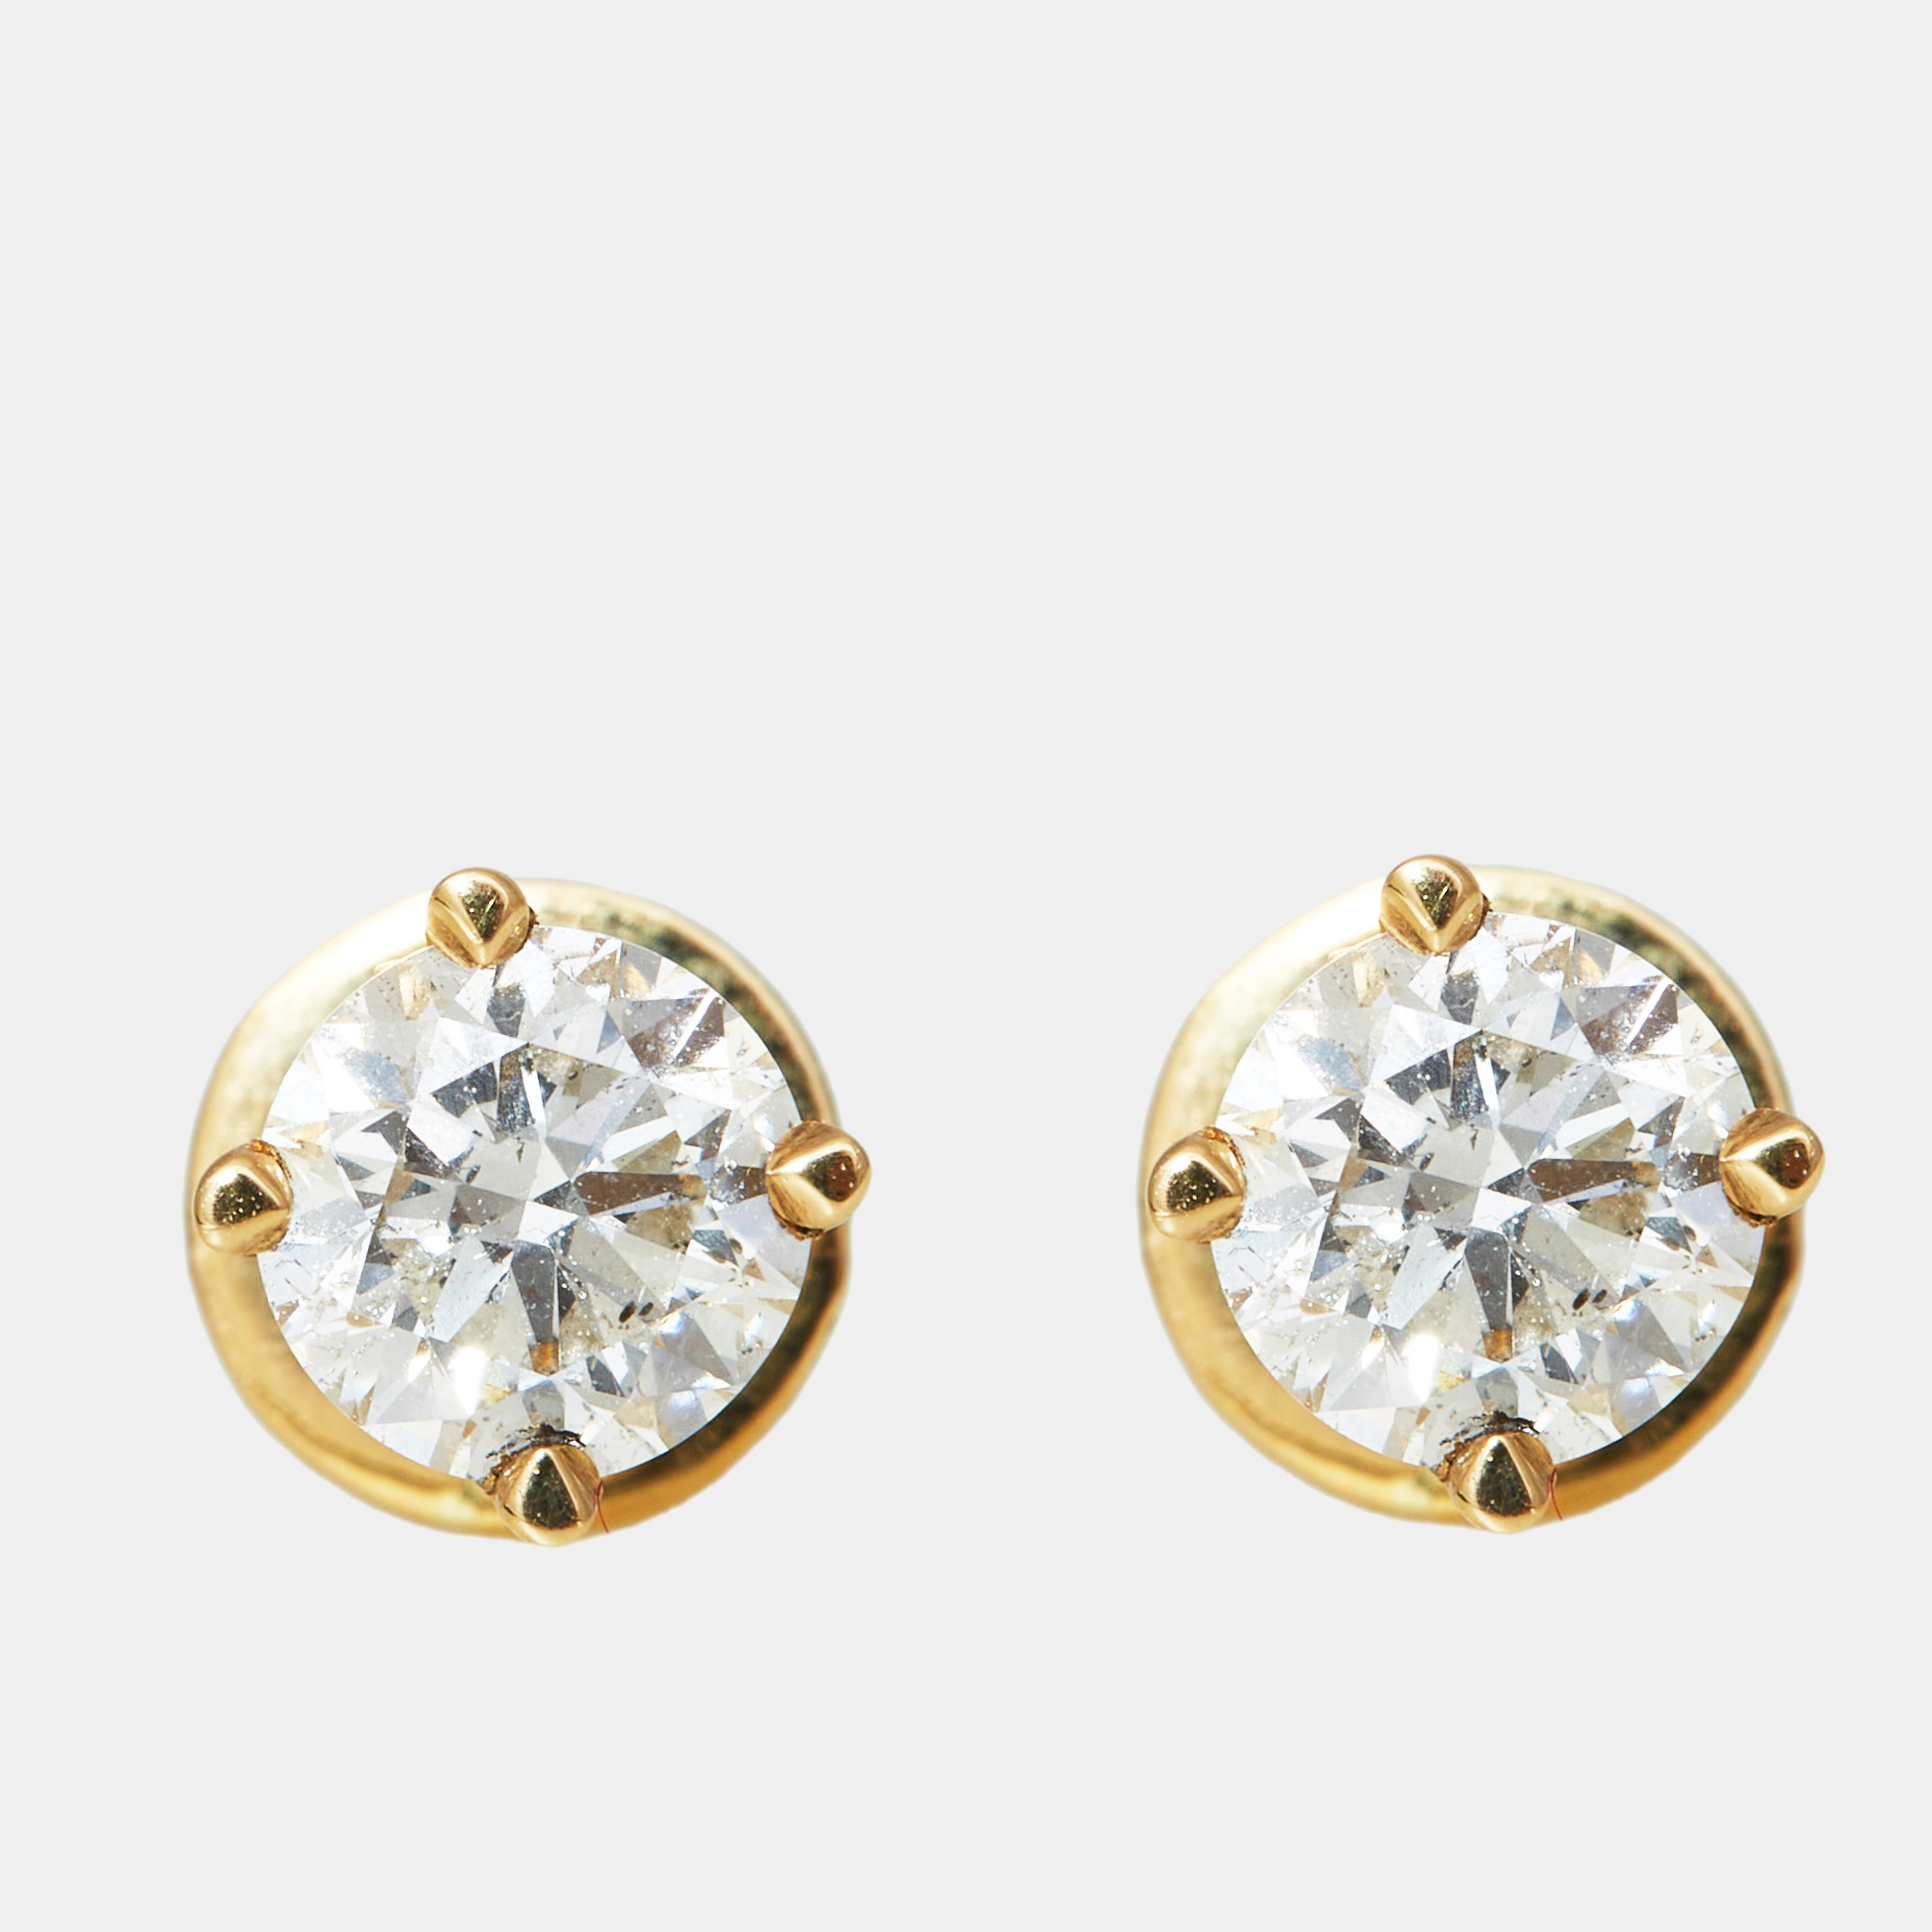 The diamond edit 18k yellow gold 0.83 ct diamond earrings